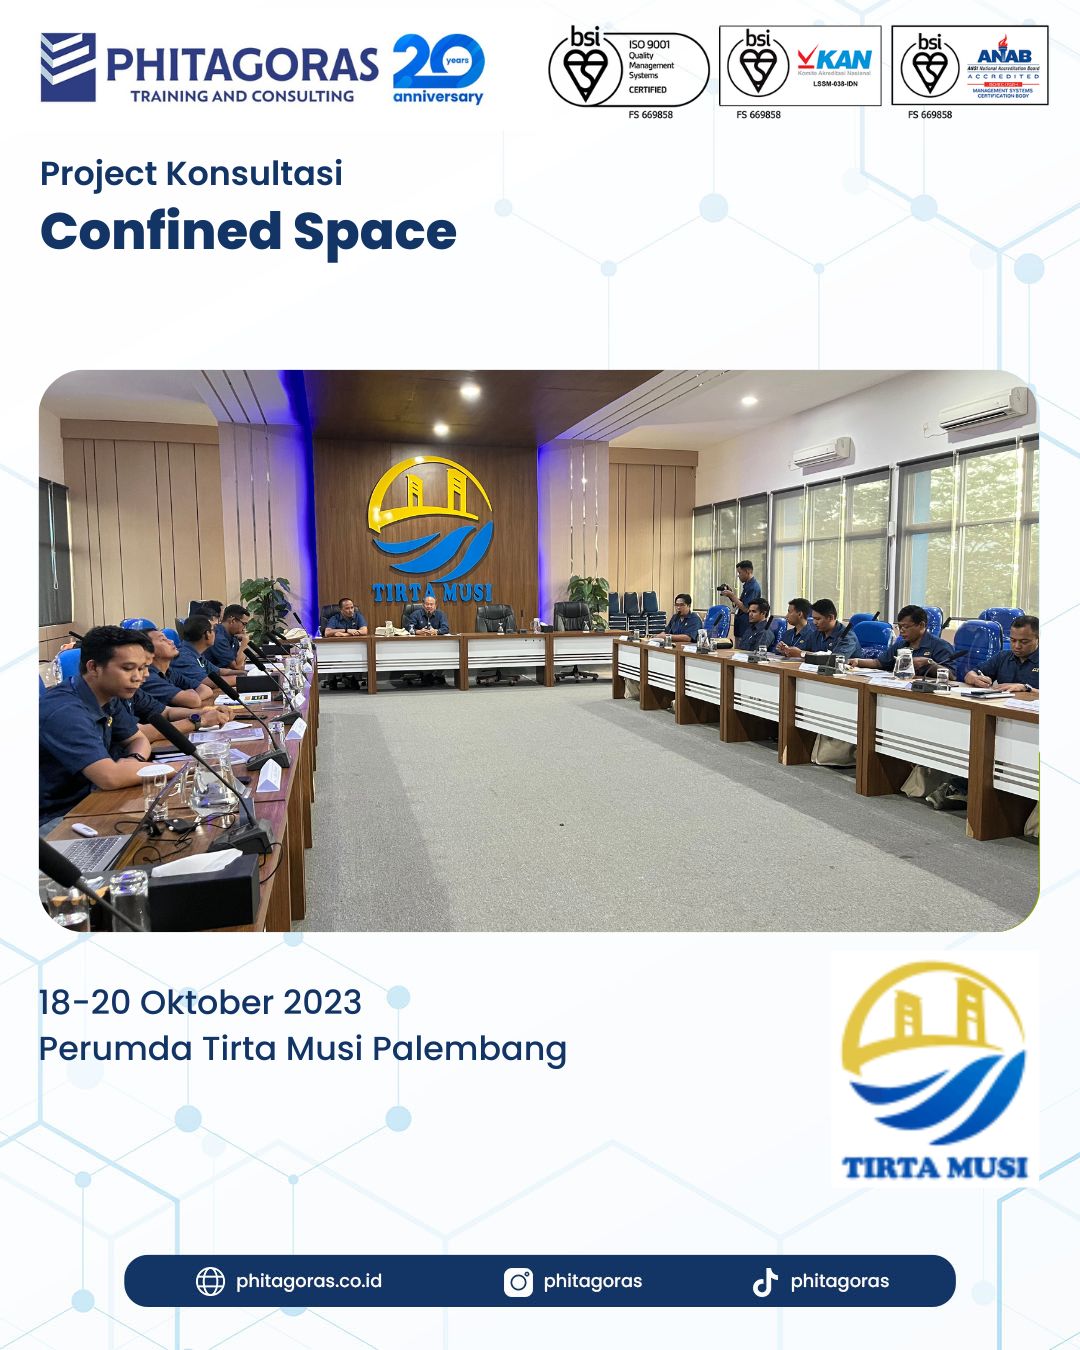 Project Konsultasi - Training Confined Space, Perumda Tirta Musi Palembang (18-20 Oktober 2023)